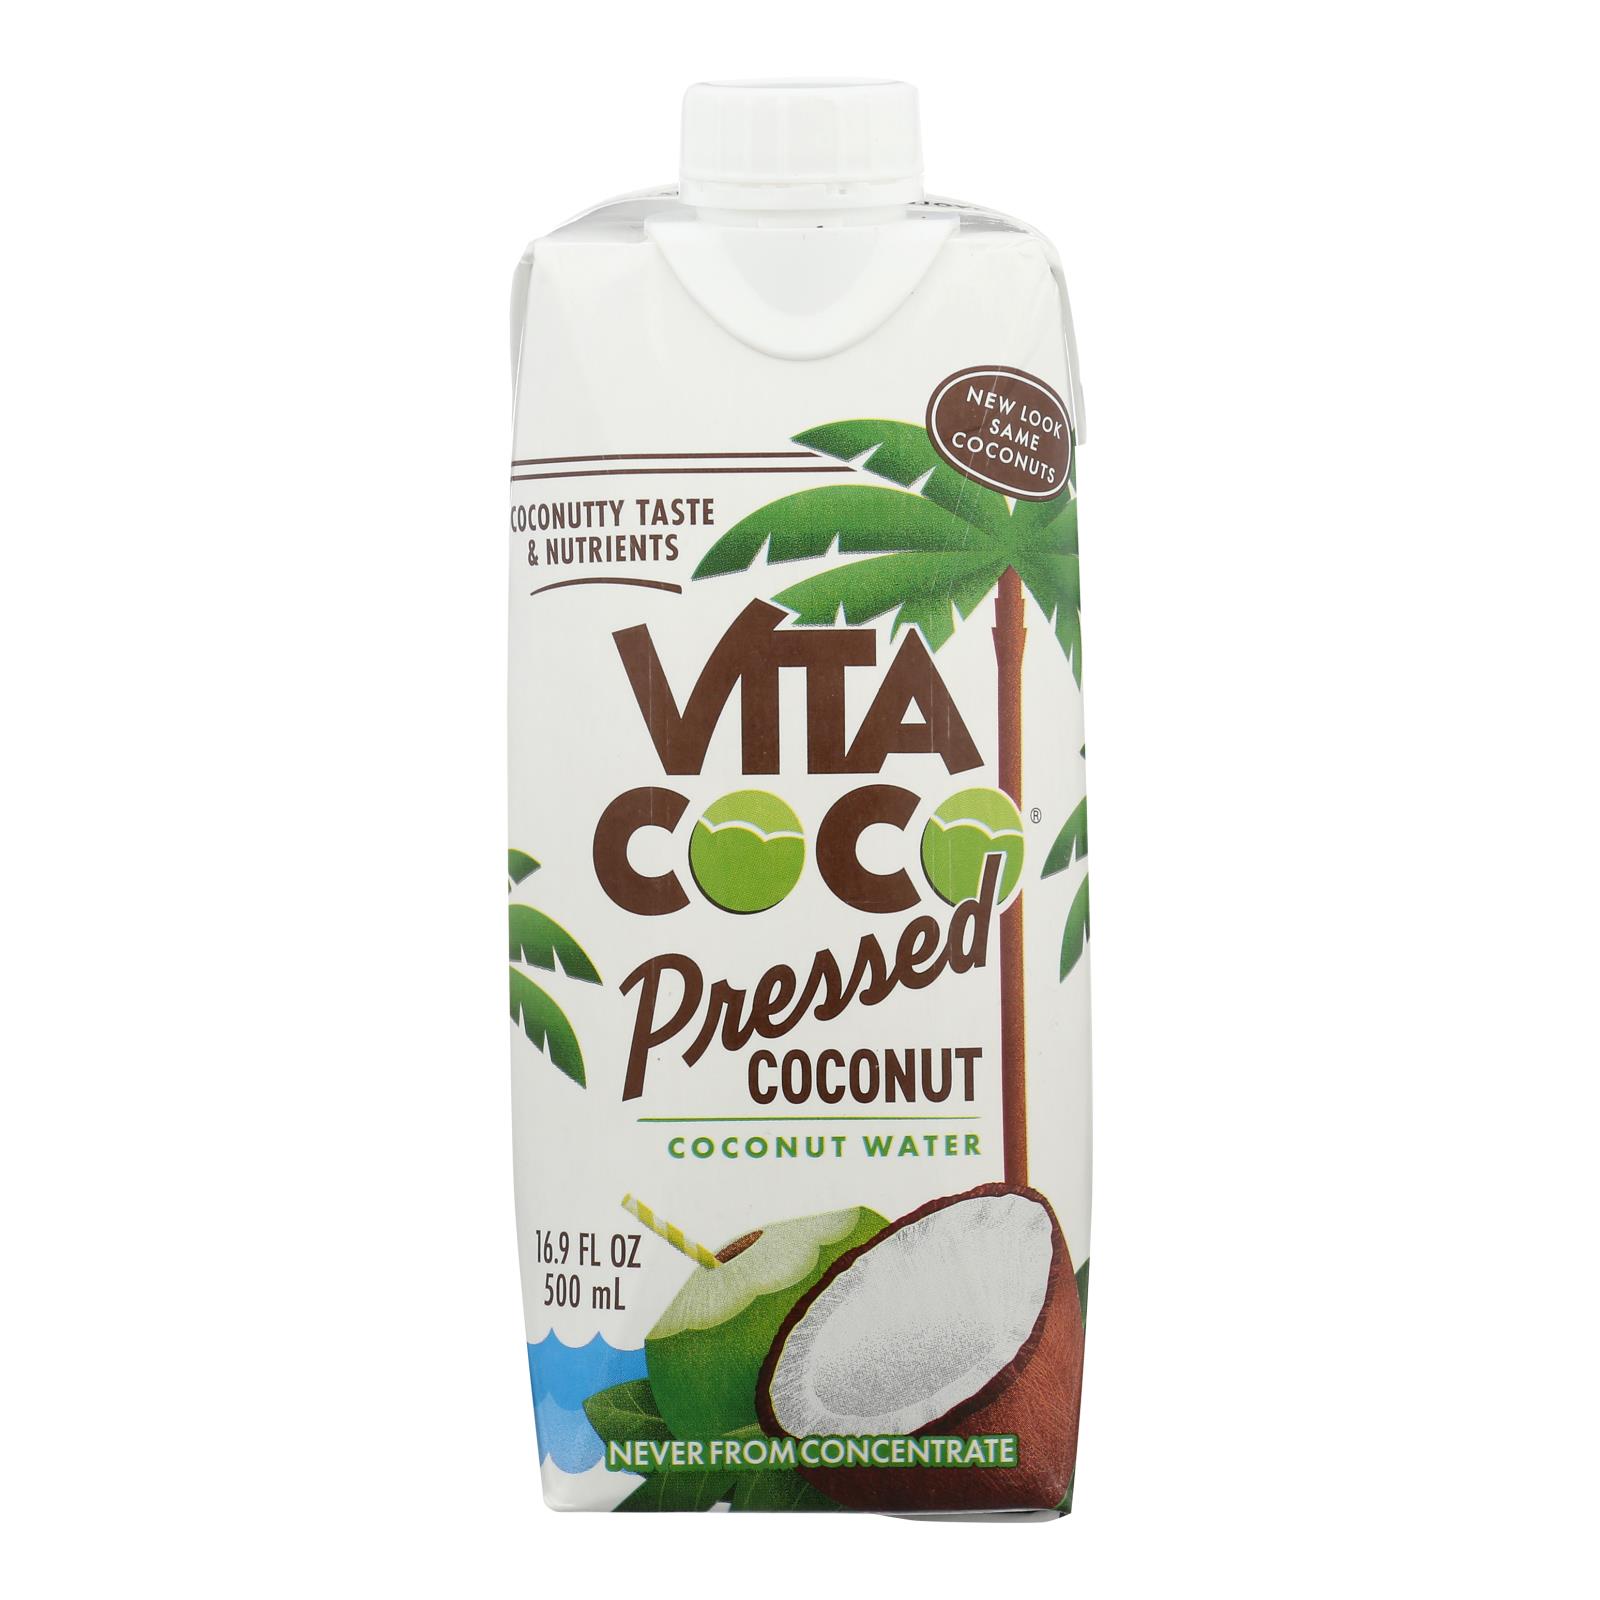 Vita Coco - Coconut Water Pressed - 12개 묶음상품 - 16.9 FZ